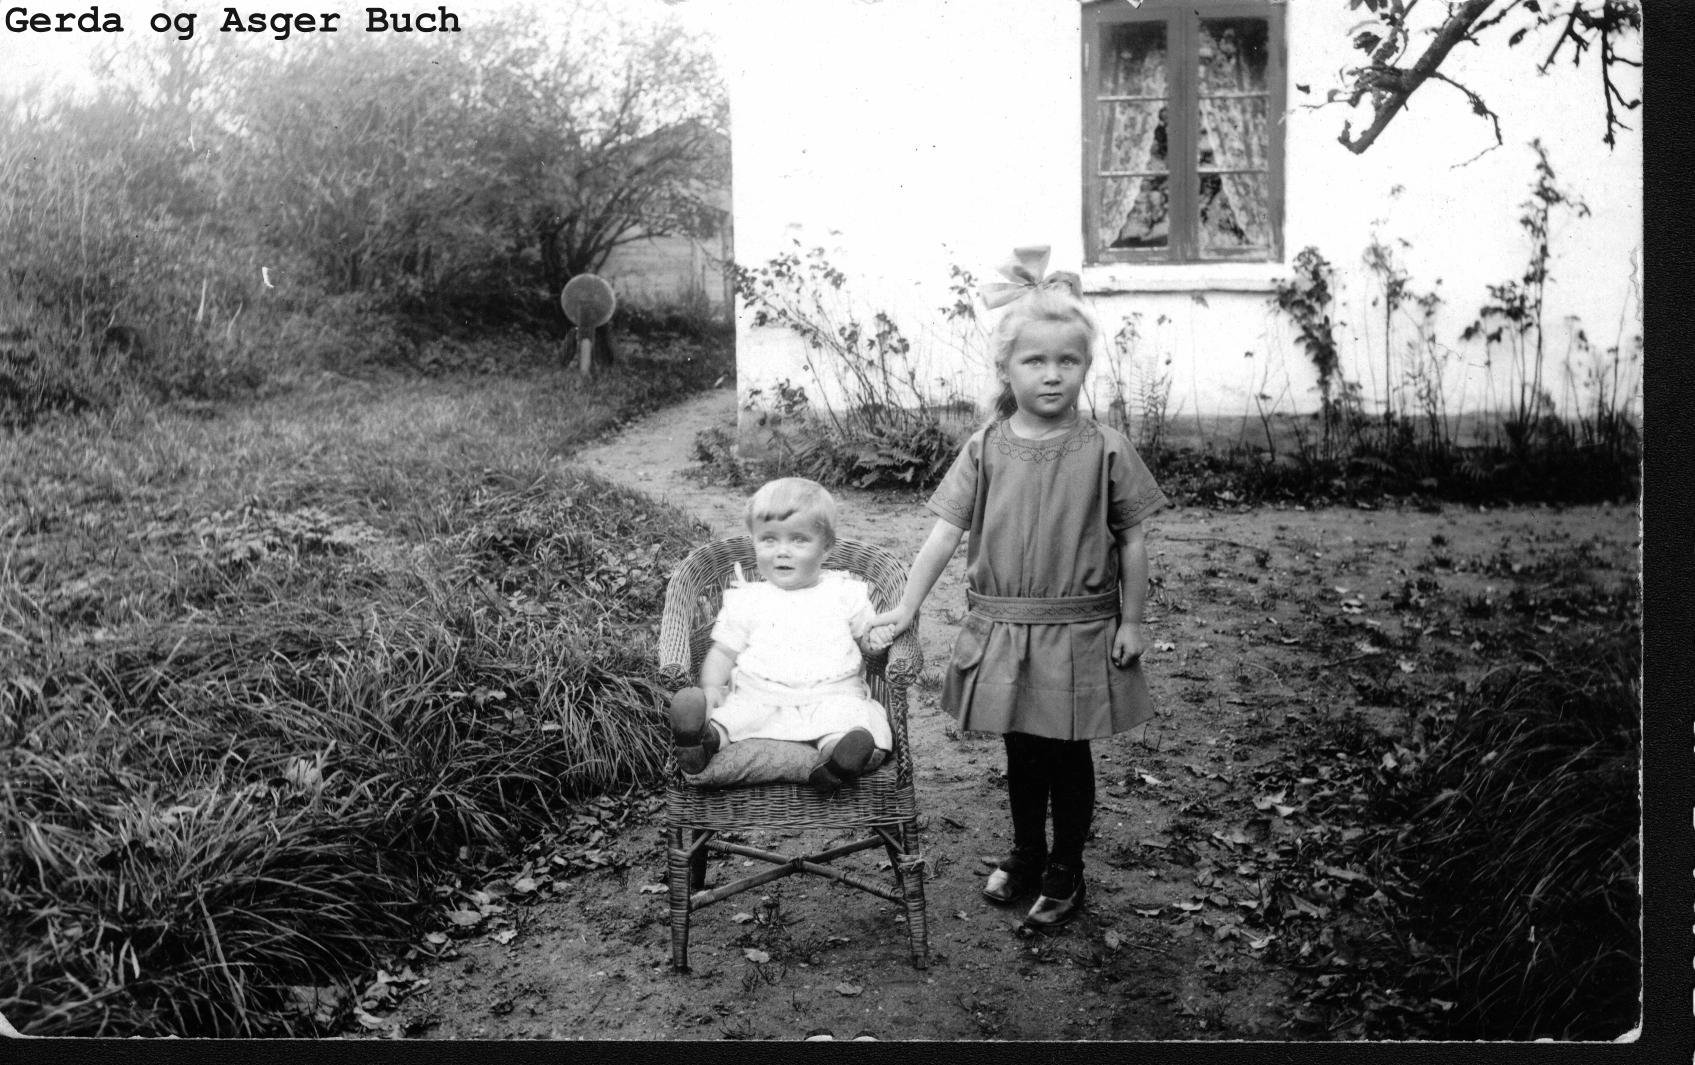 Gerda og Asger Buch som børn